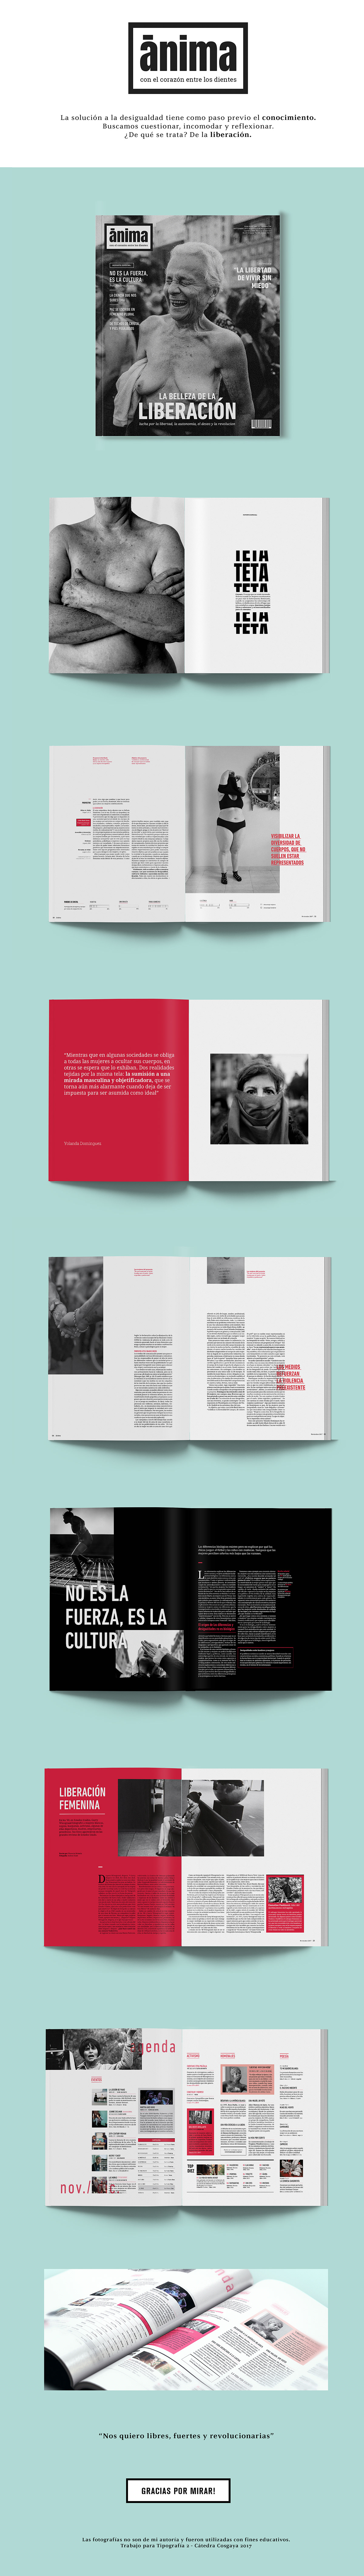 magazine women rights anima editorial typography   feminismo graphic design  revista tipografia diversidad